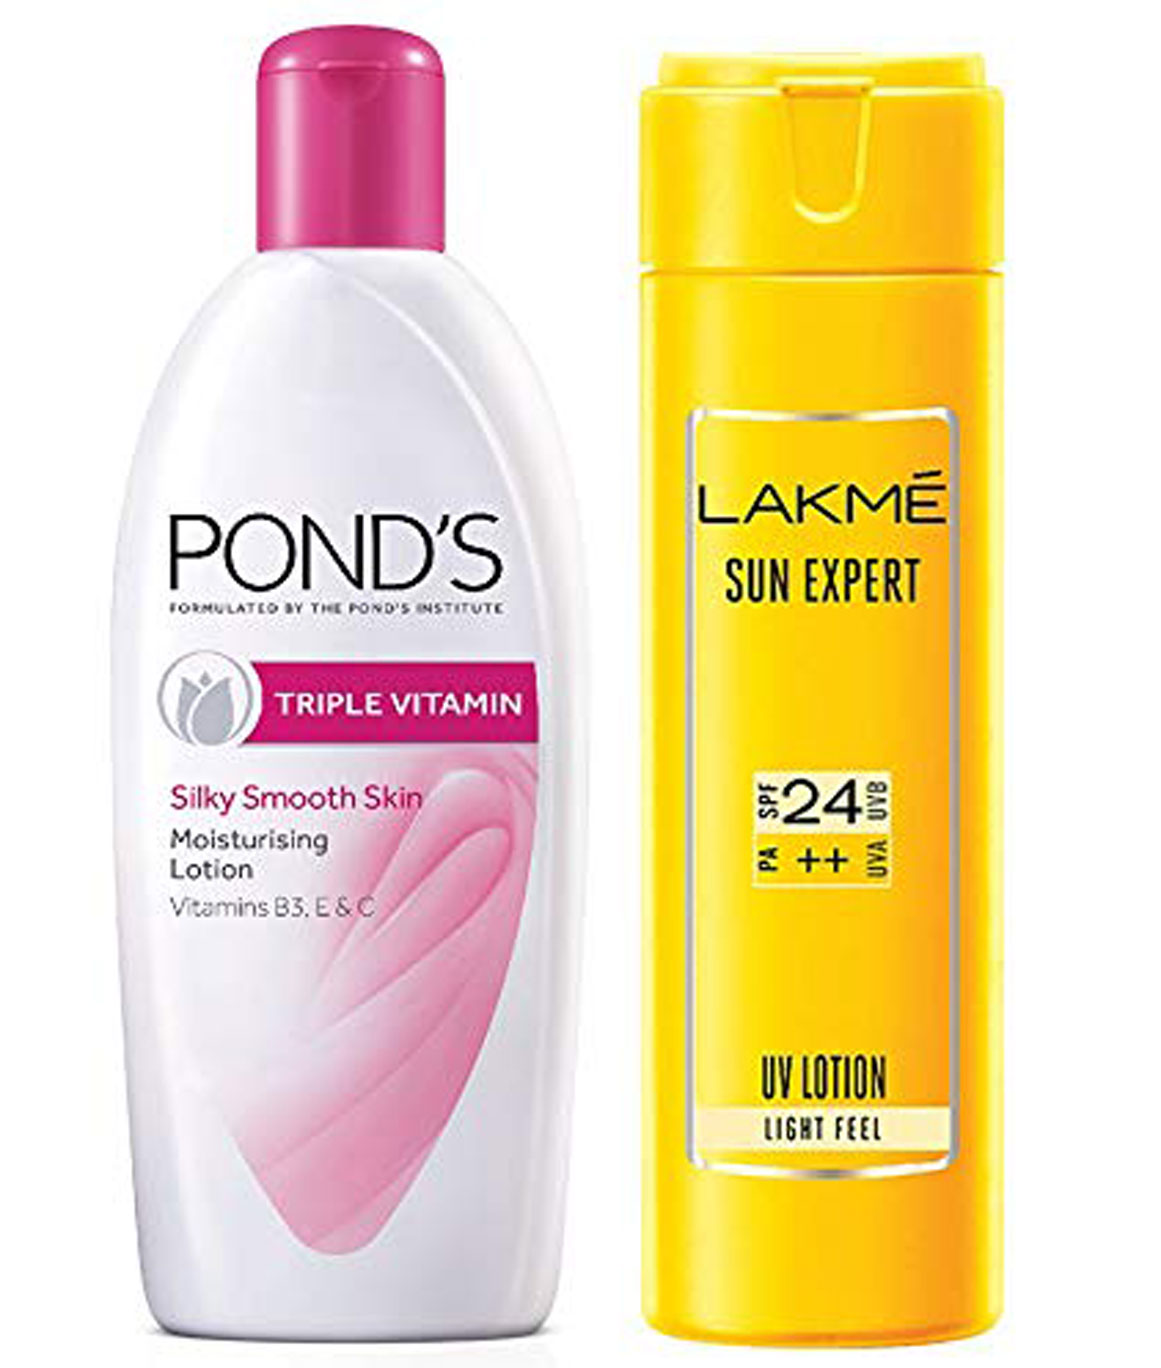 Ponds Triple Vitamin Moisturising Body Lotion, 300ml & Lakme Sun Expert SPF 24 PA Fairness UV Sunscreen Lotion, 60ml